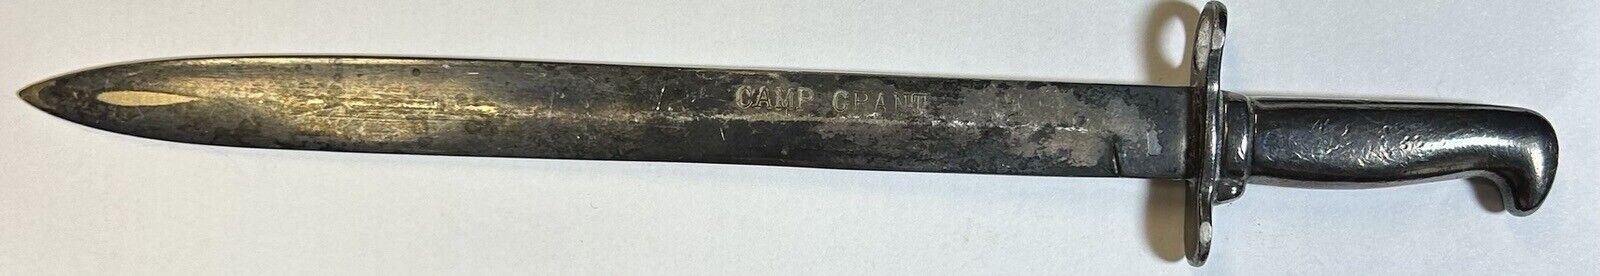 Camp Grant 7 1/2” Silver Plate Officer’s Sword Letter Opener